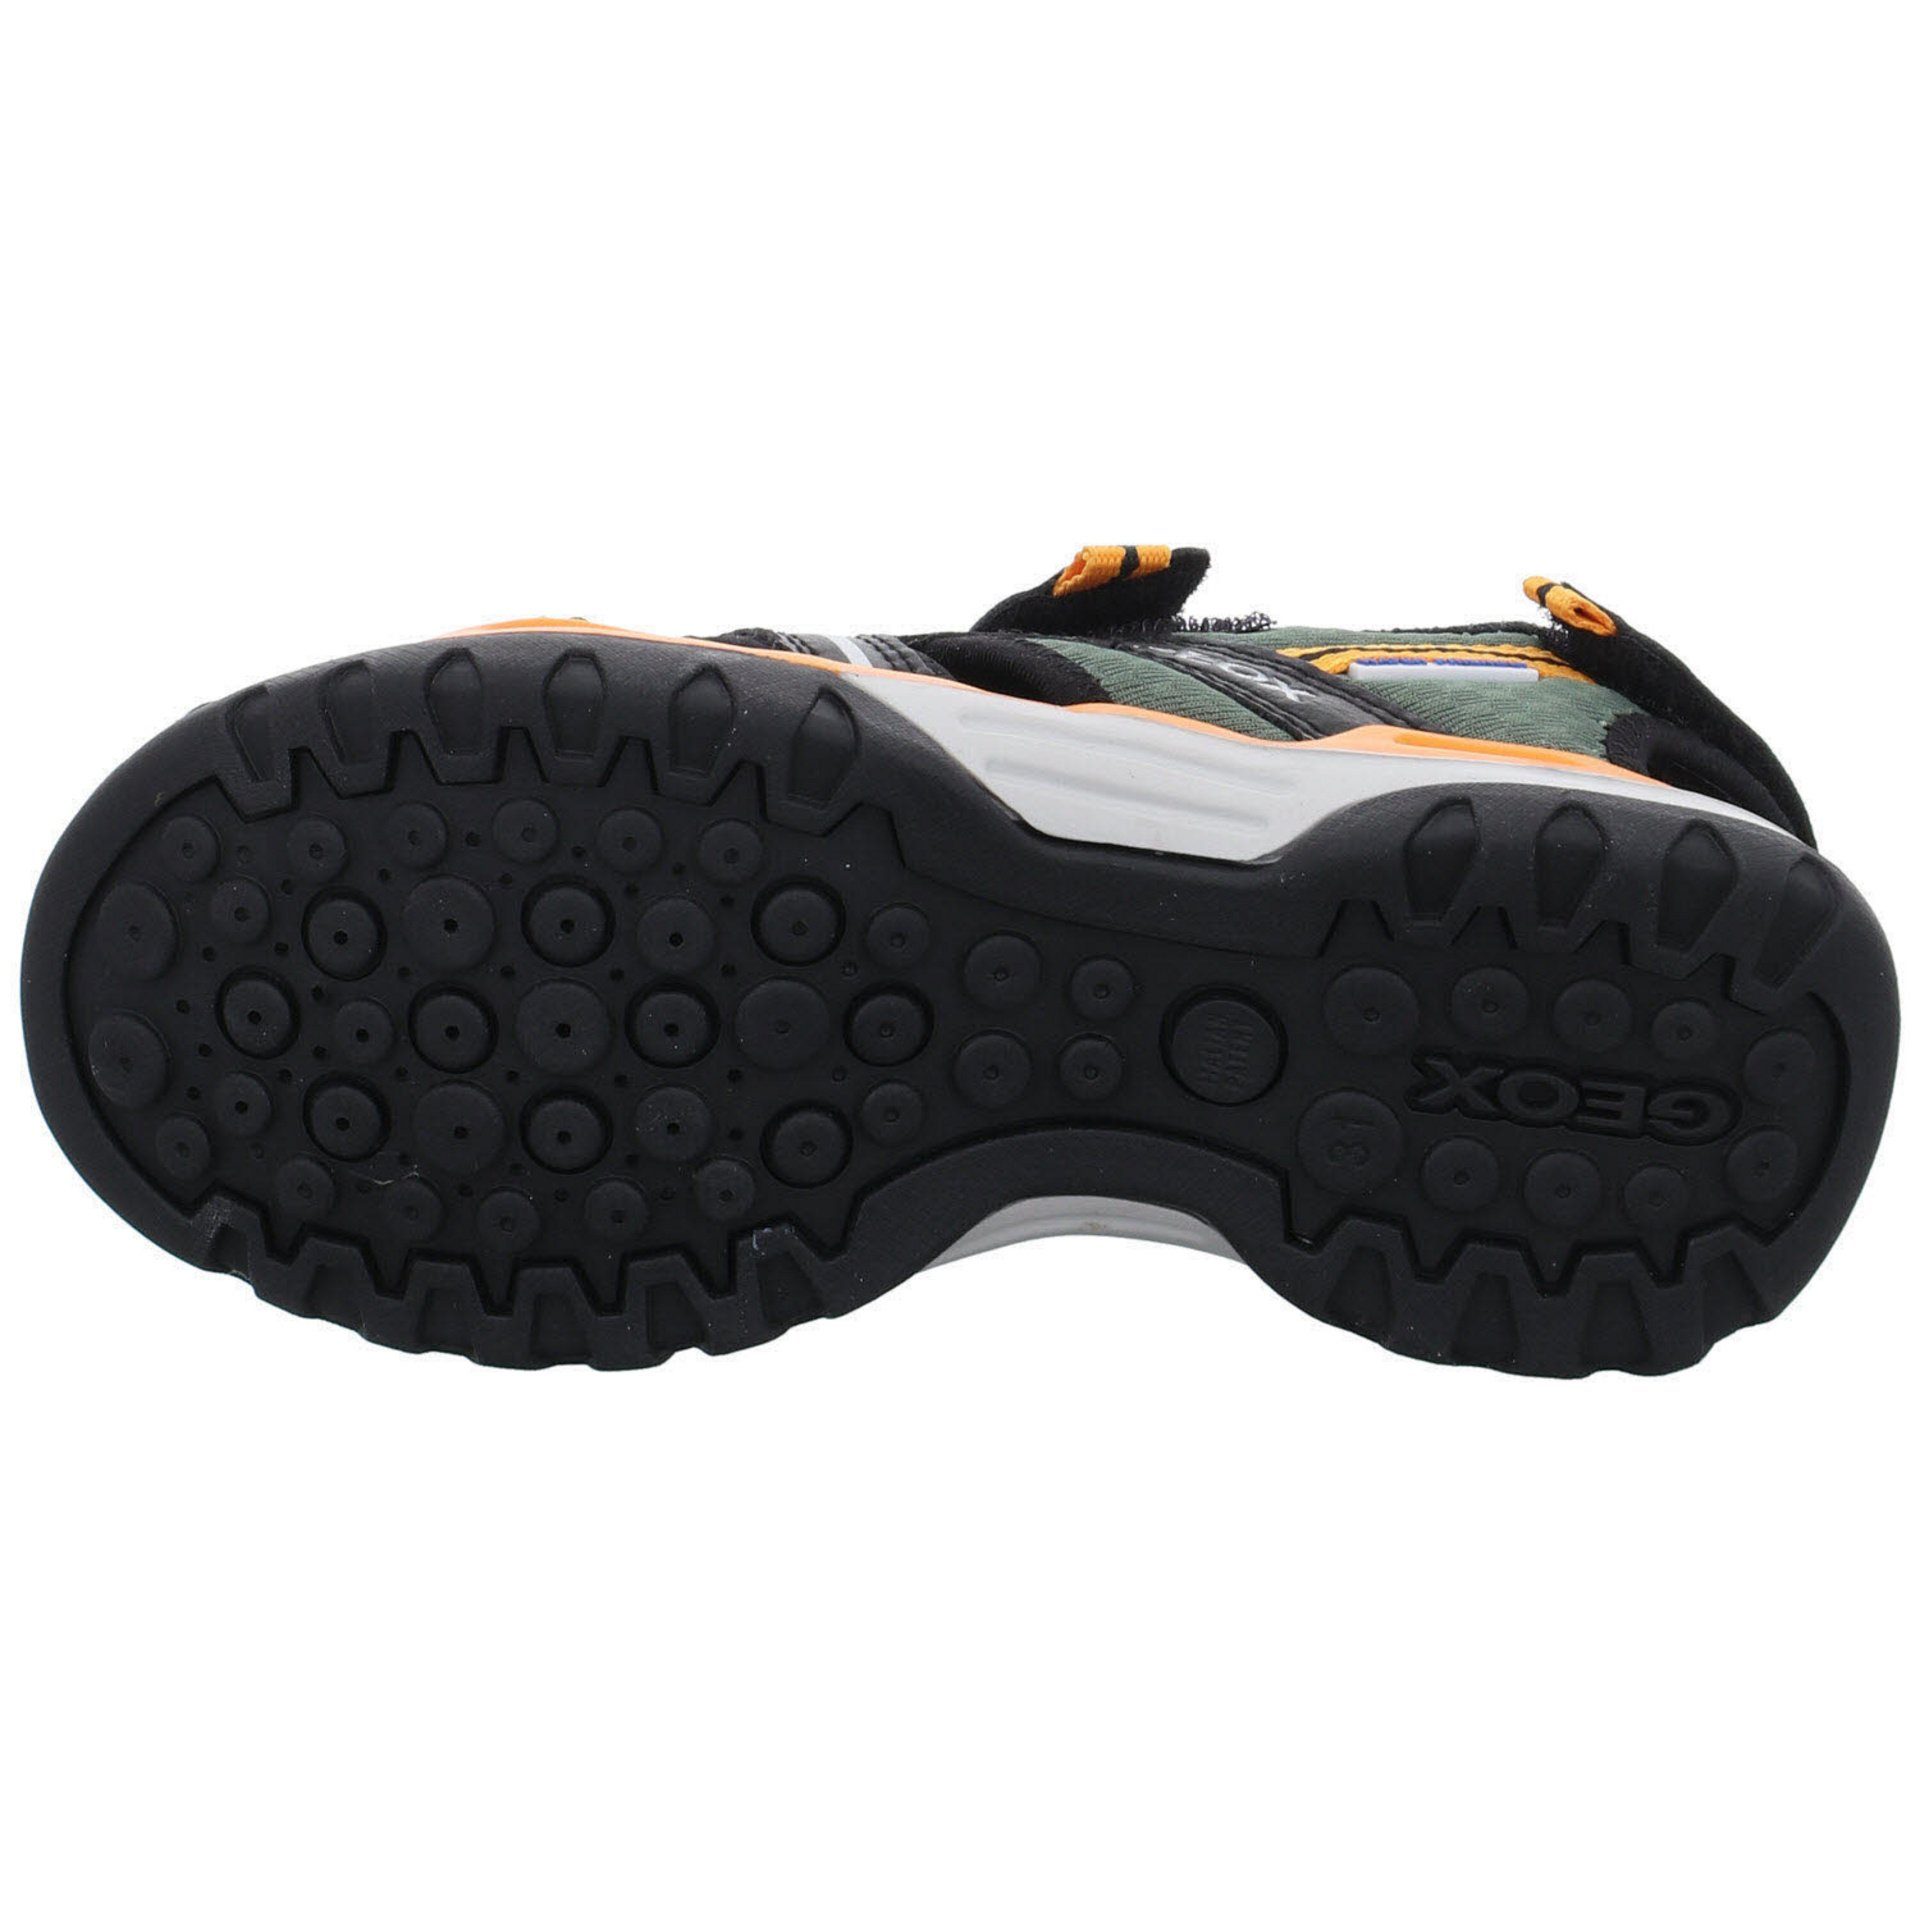 Geox Jungen Schwarz Borealis Outdoorsandale Sandale Sandalen Synthetikkombination Orange Schuhe